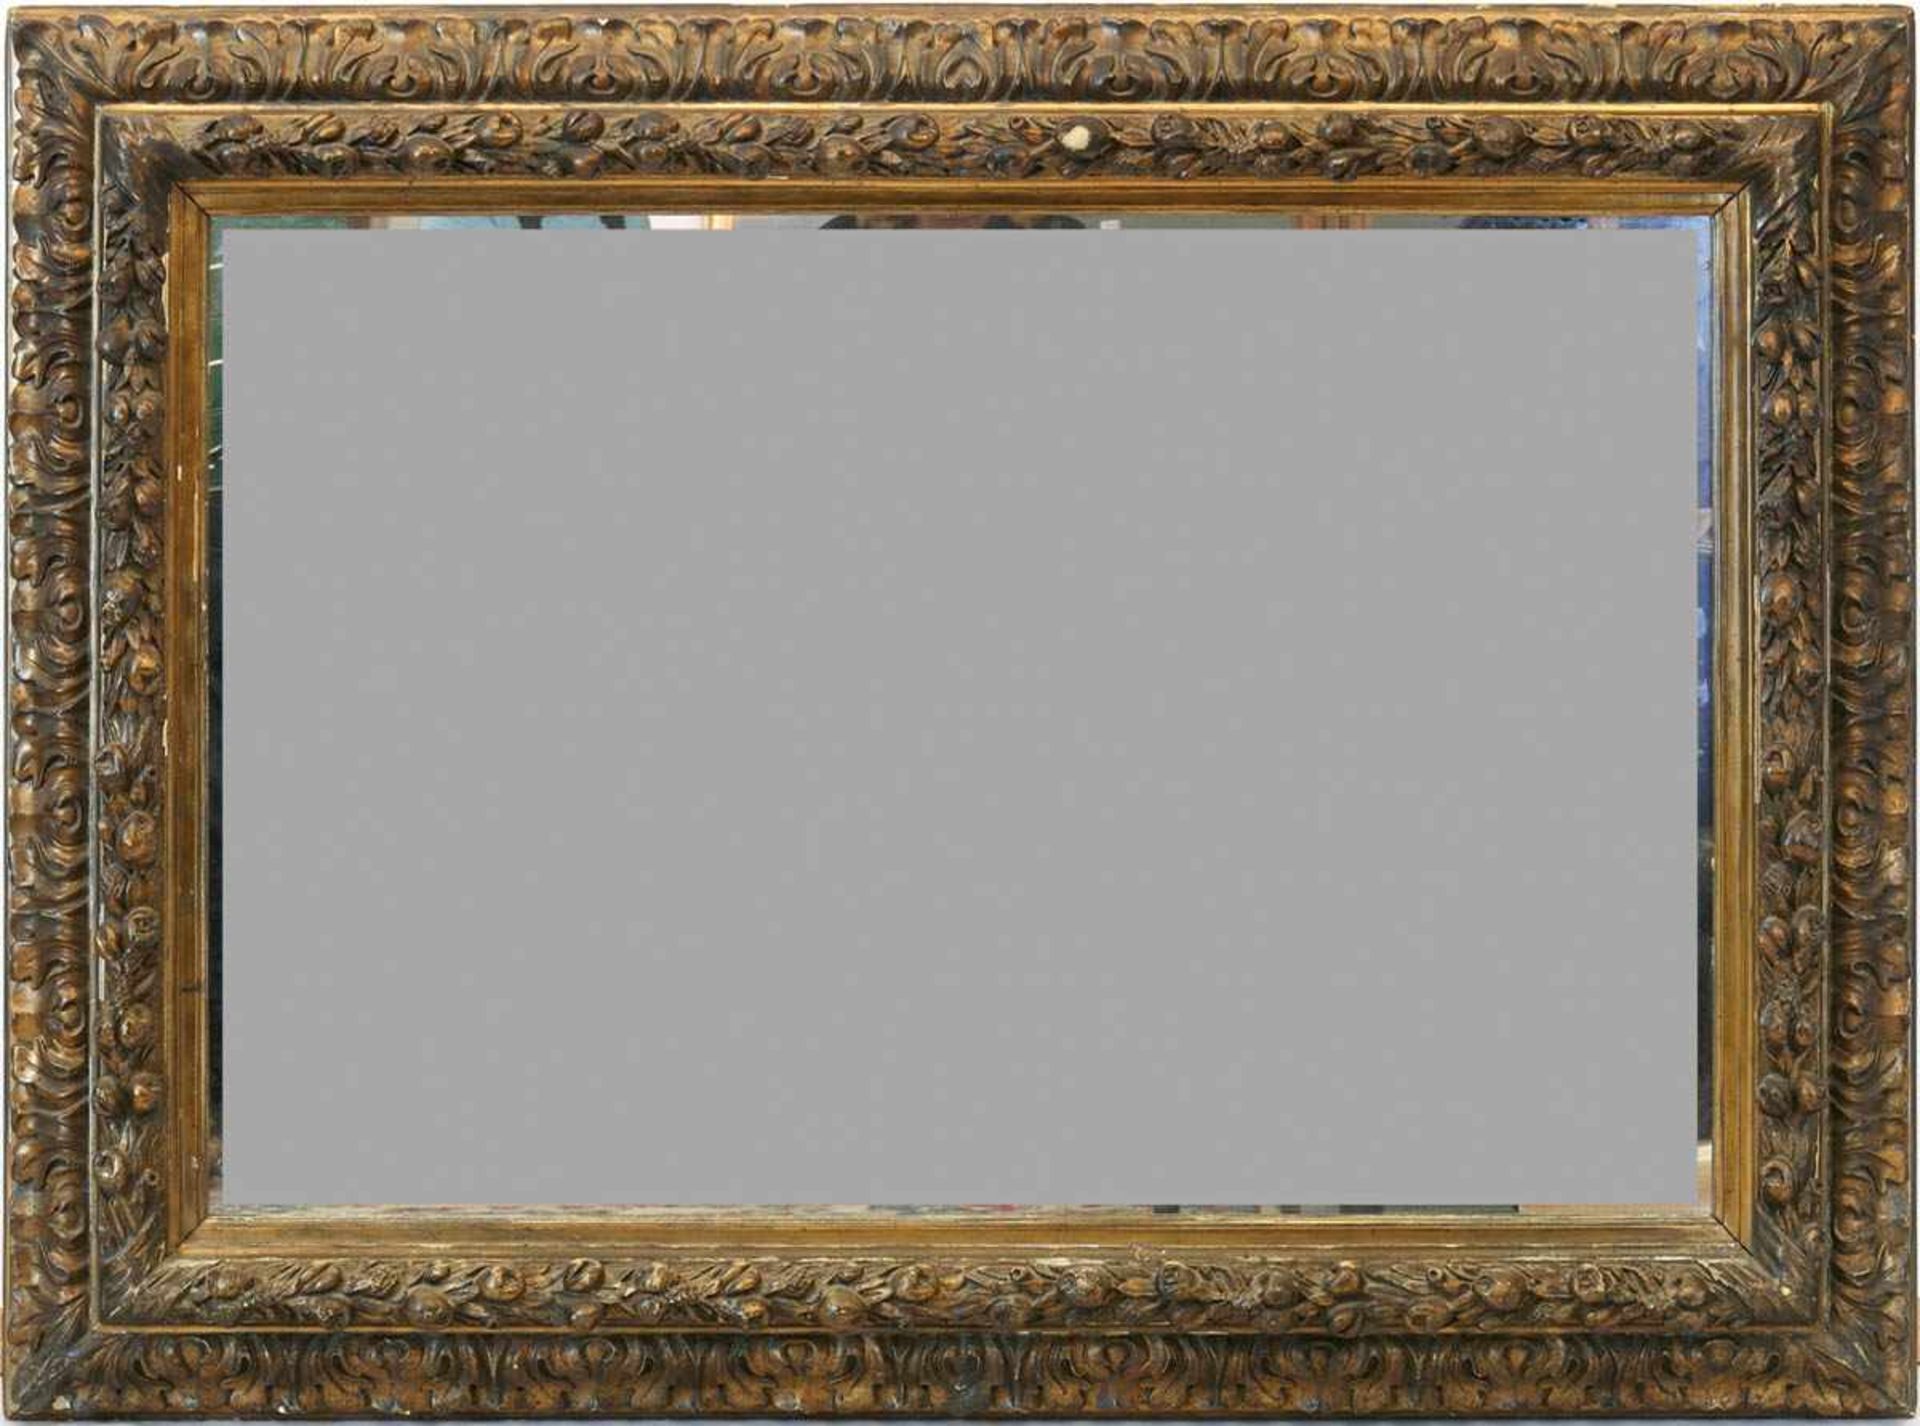 Rahmen mit Spiegel, 19. Jh., Holz/Stuck, vergoldet, rechteckig, 91x126 cm